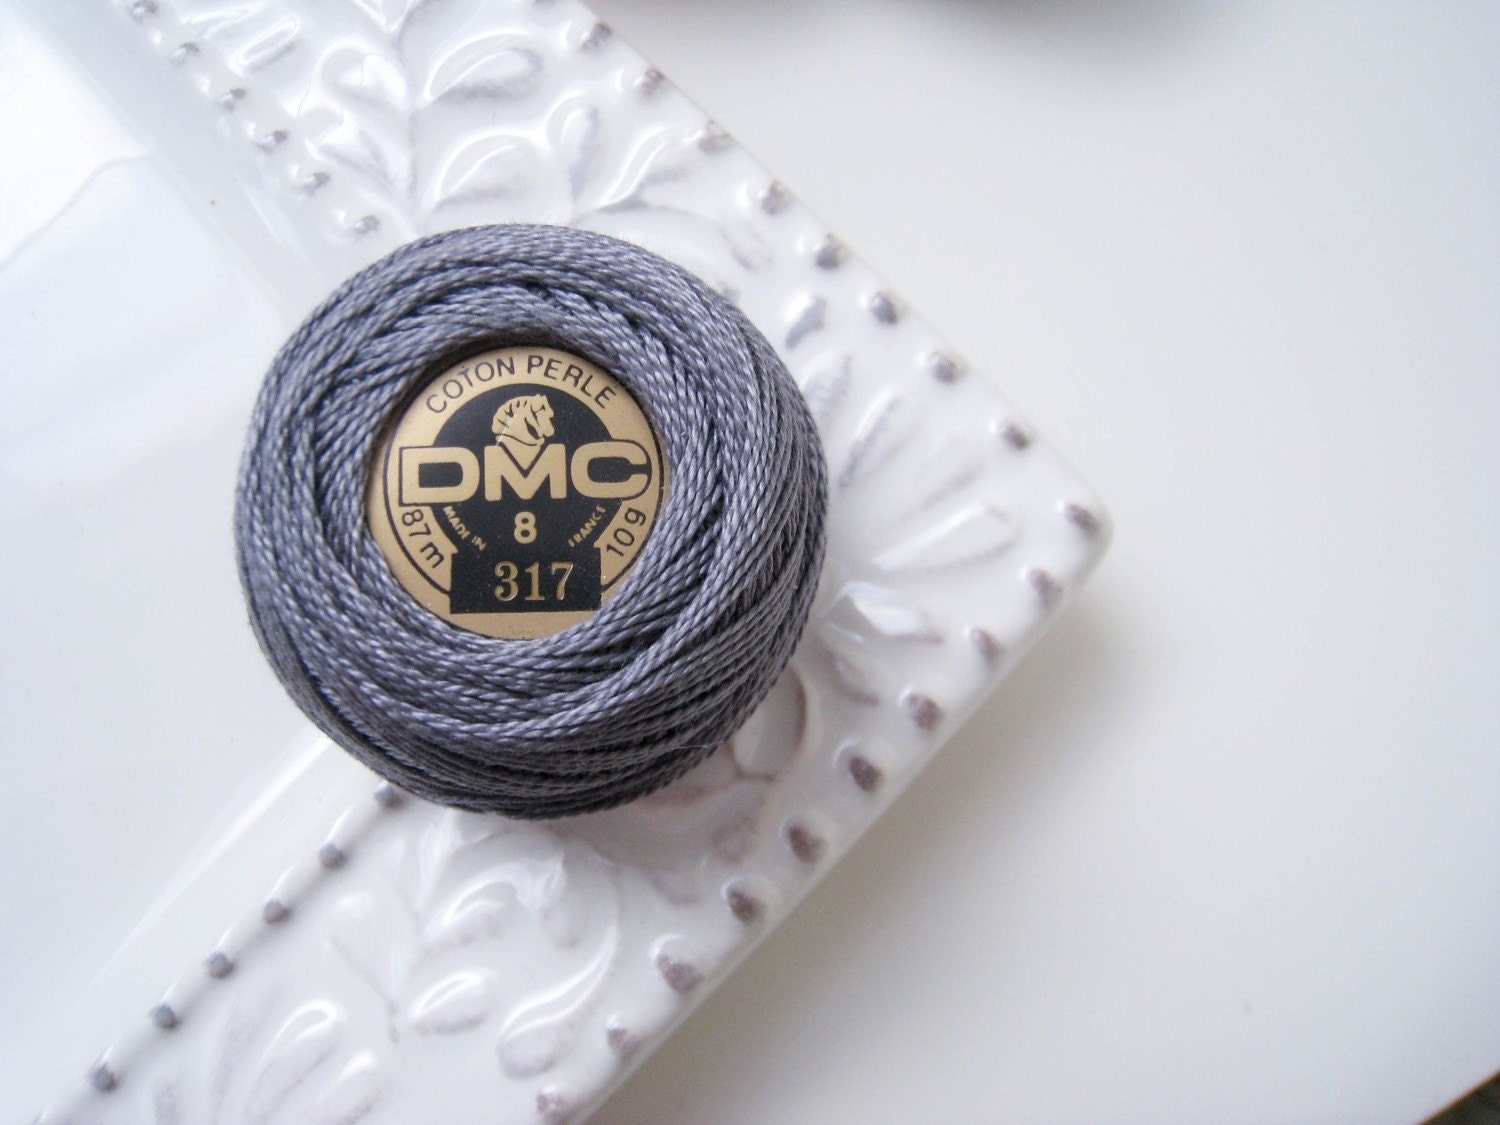 Variegated Embroidery Thread. Fine Perle 16 Citrus, Variegated Hand Embroidery  Thread 